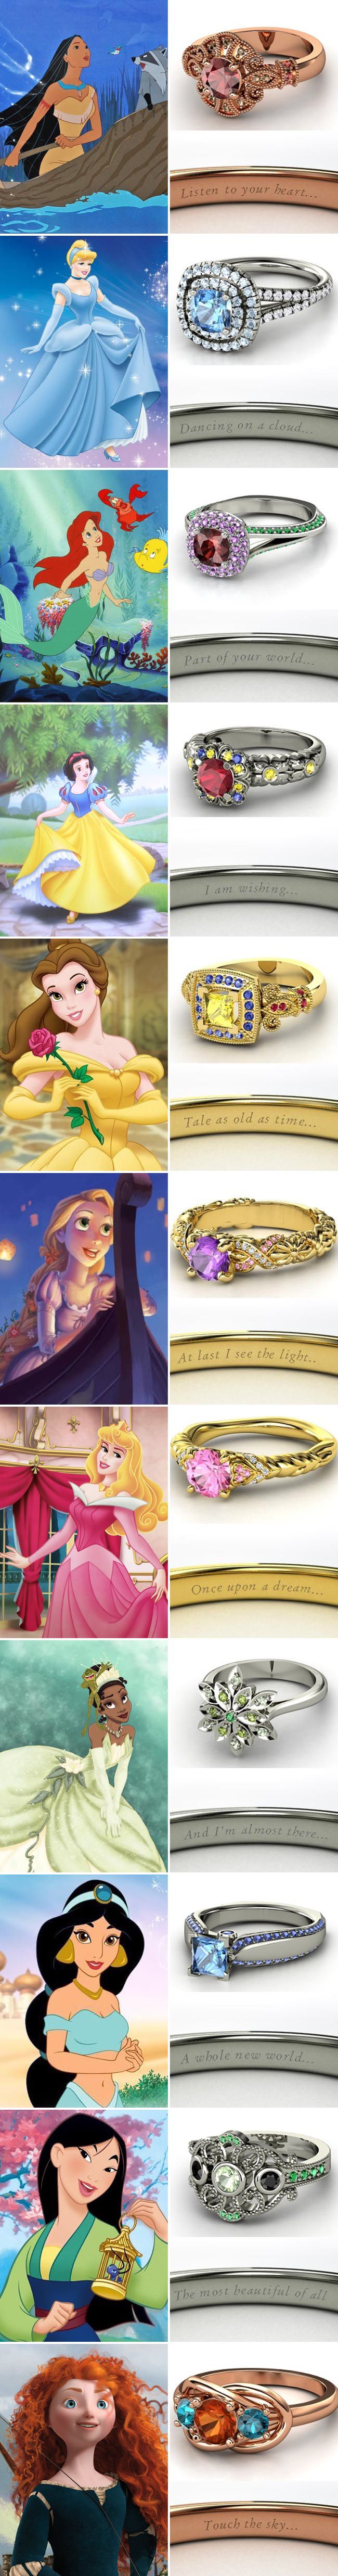 Disney princesses wedding rings